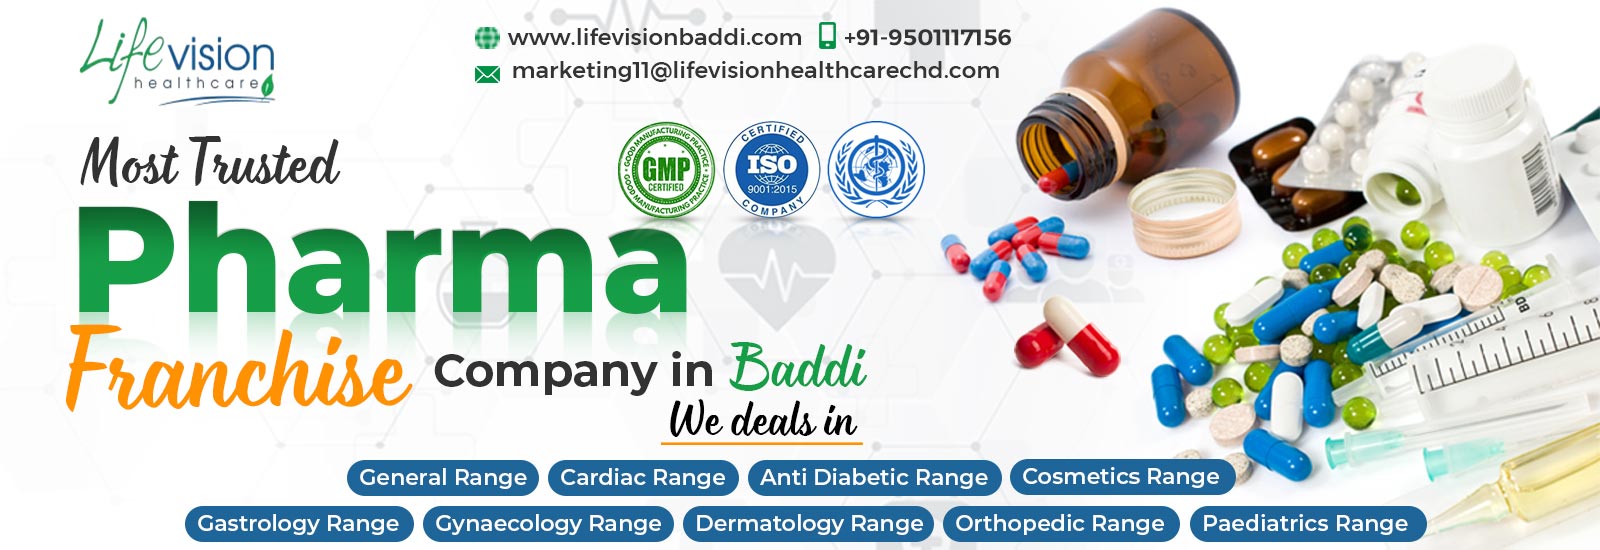 PCD Franchise Company in Baddi | Lifevision Healthcare